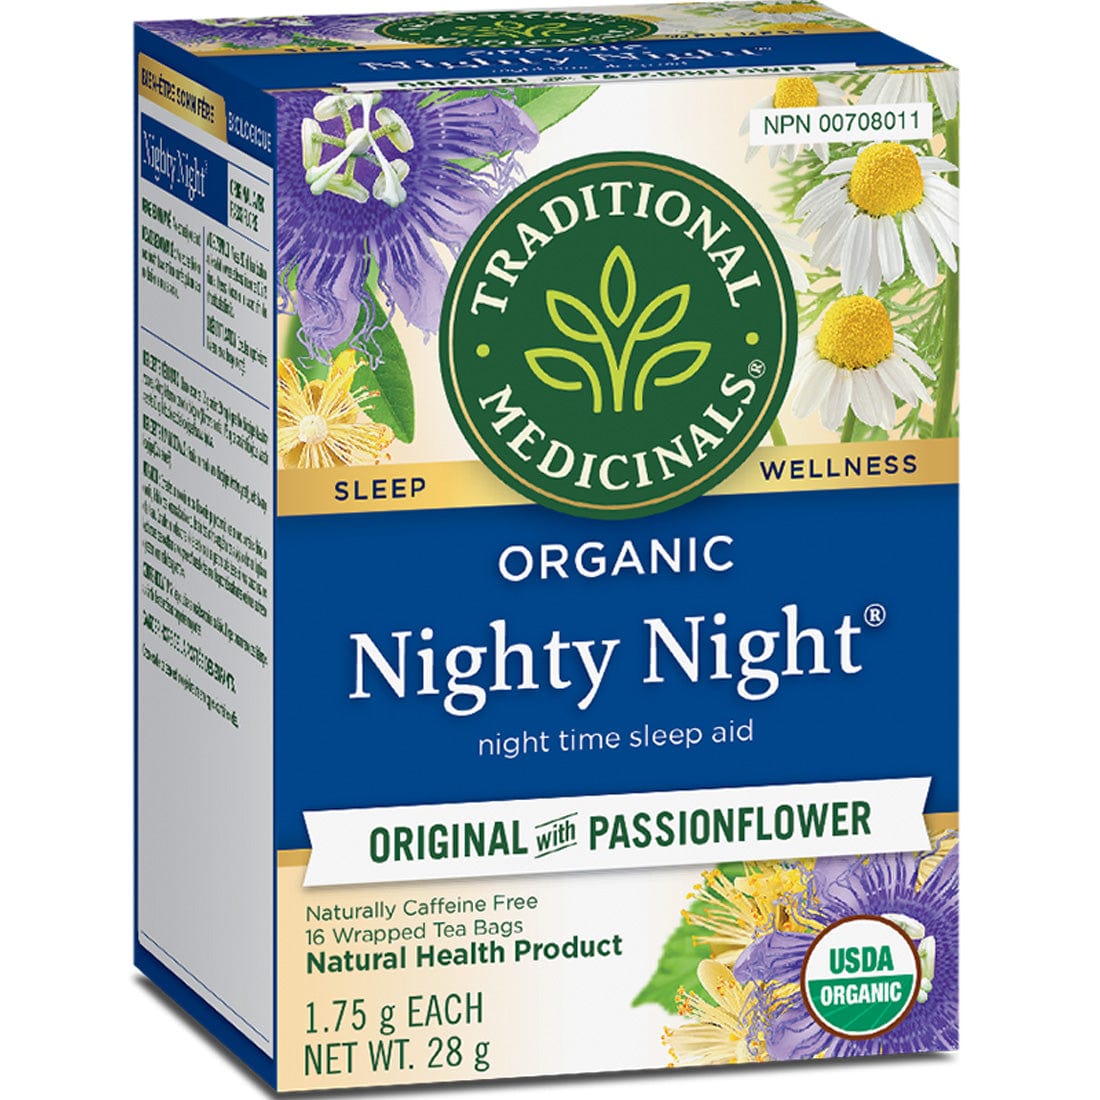 Traditional Medicinals Organic Nighty Night Tea, 16 Wrapped Tea Bags